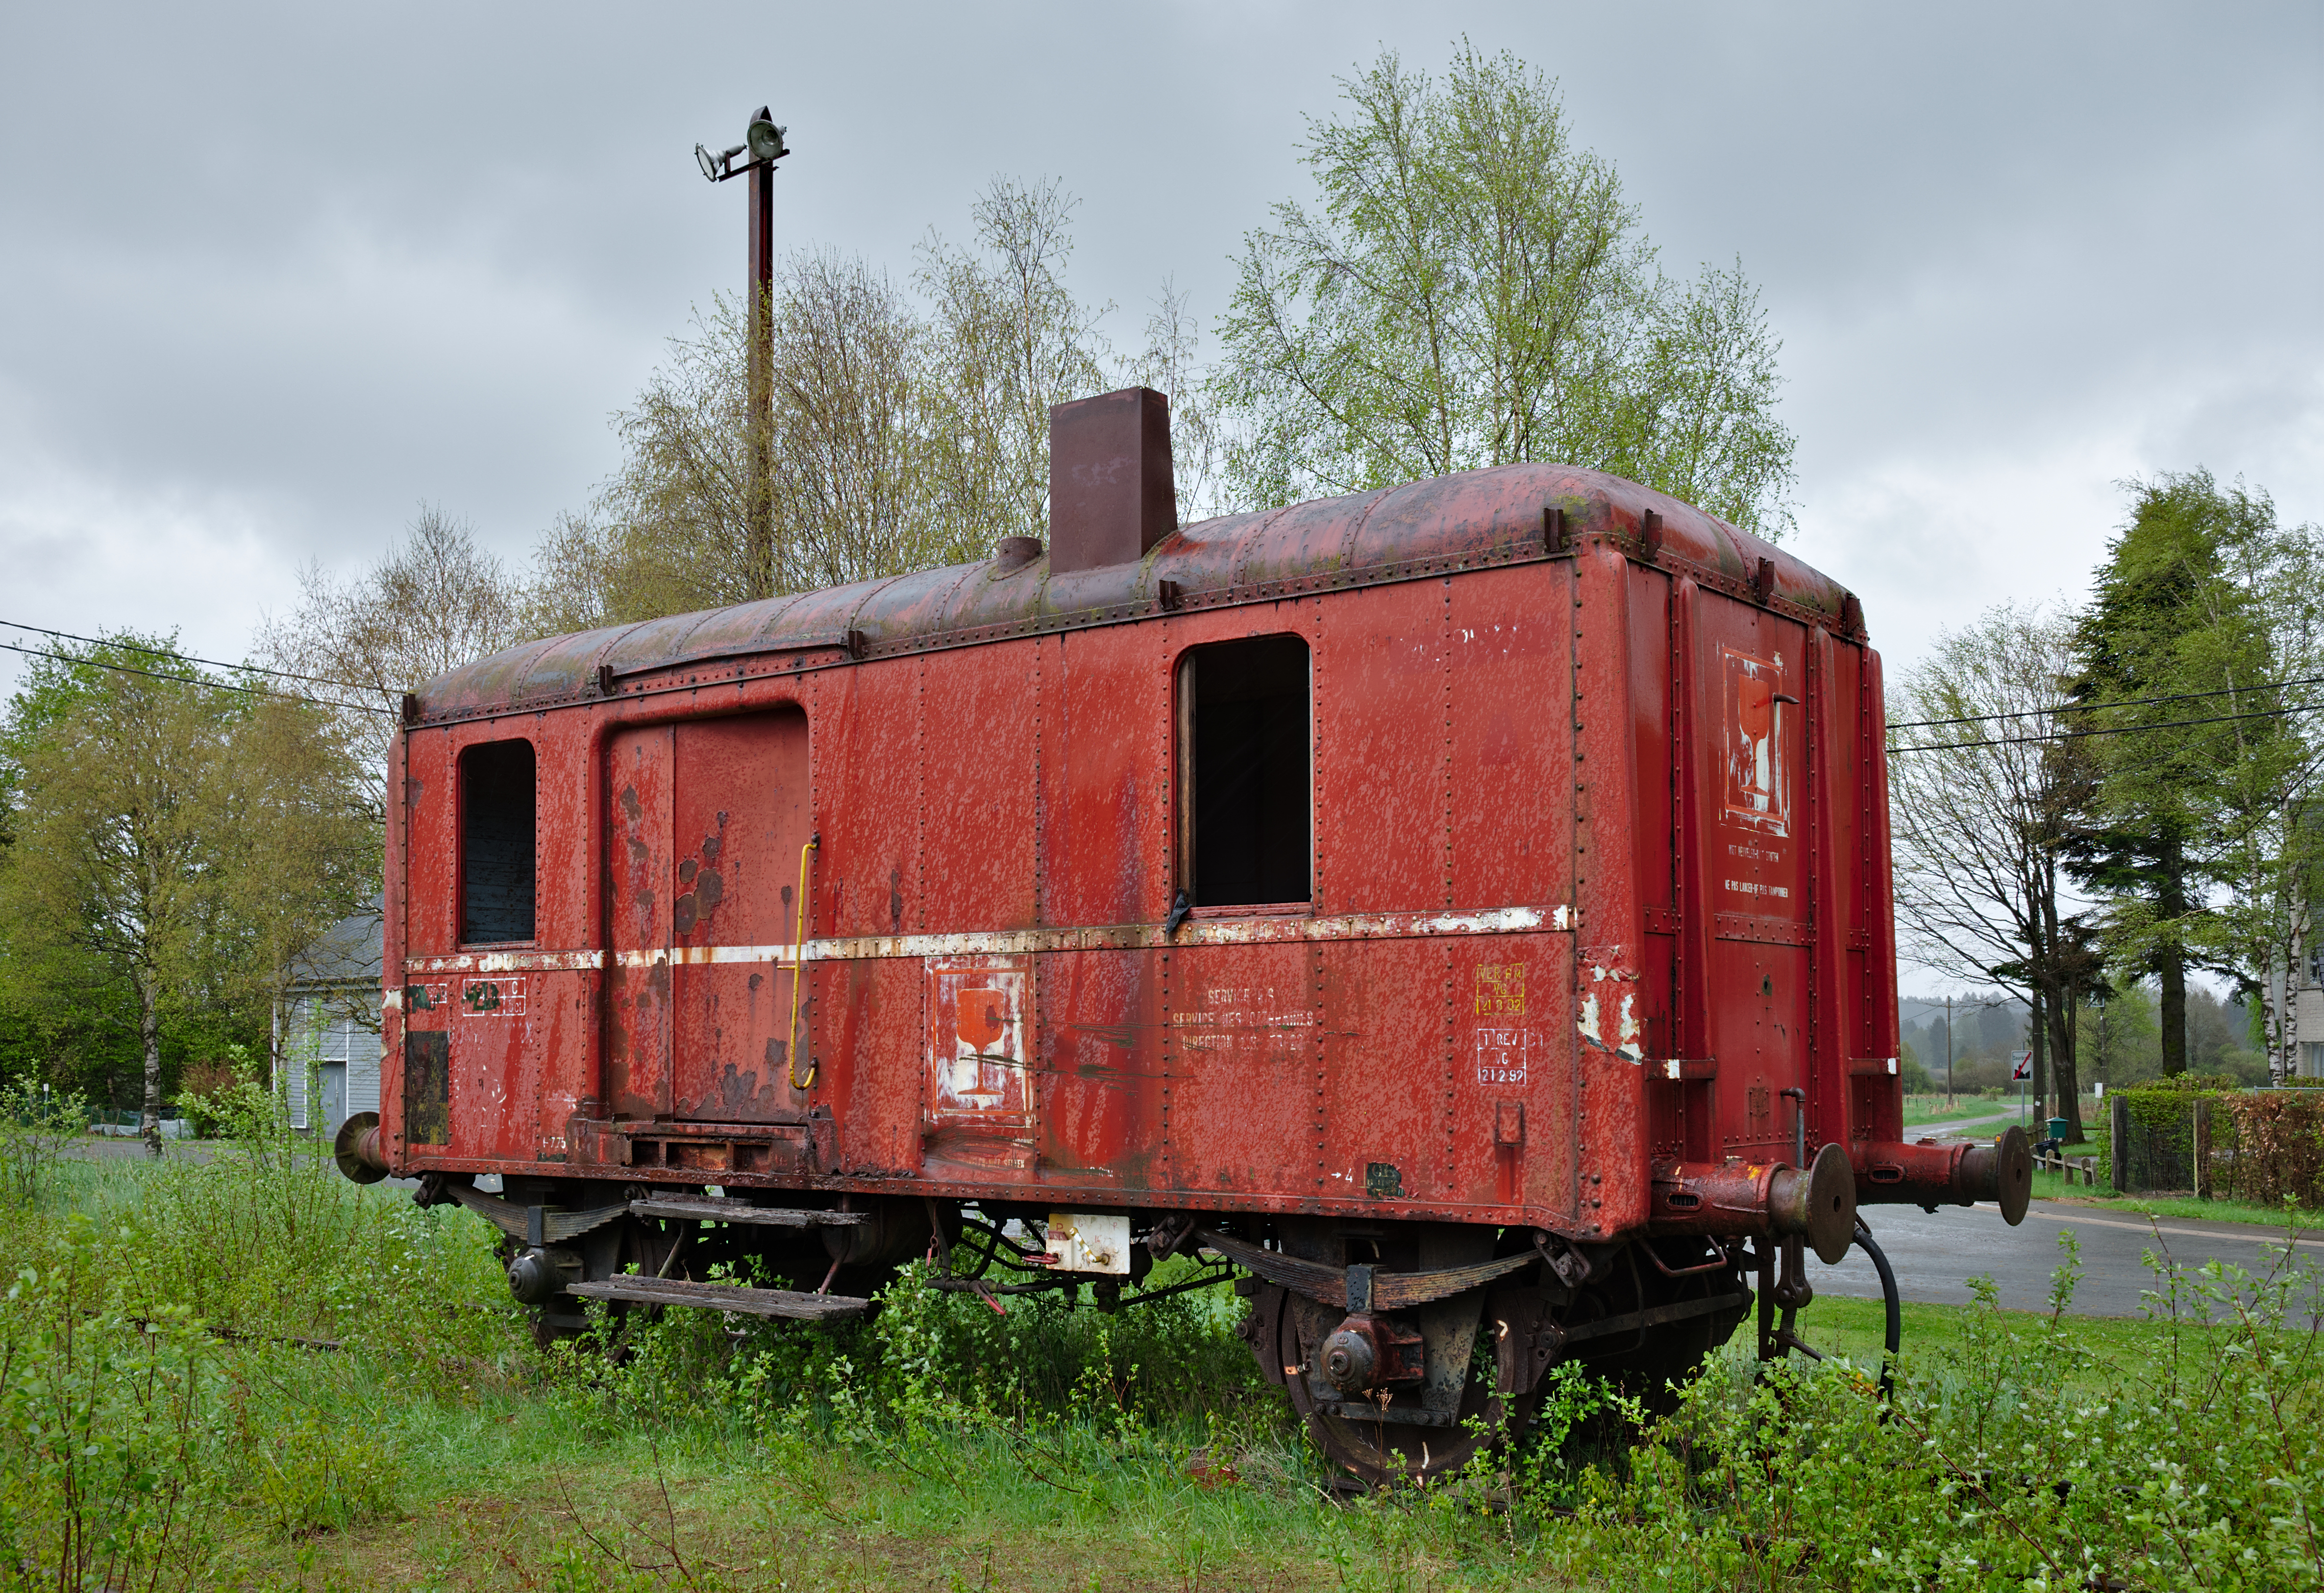 Retired overhead line rail service vehicle in Sourbrodt train station (DSCF5823) Waimes, Belgium